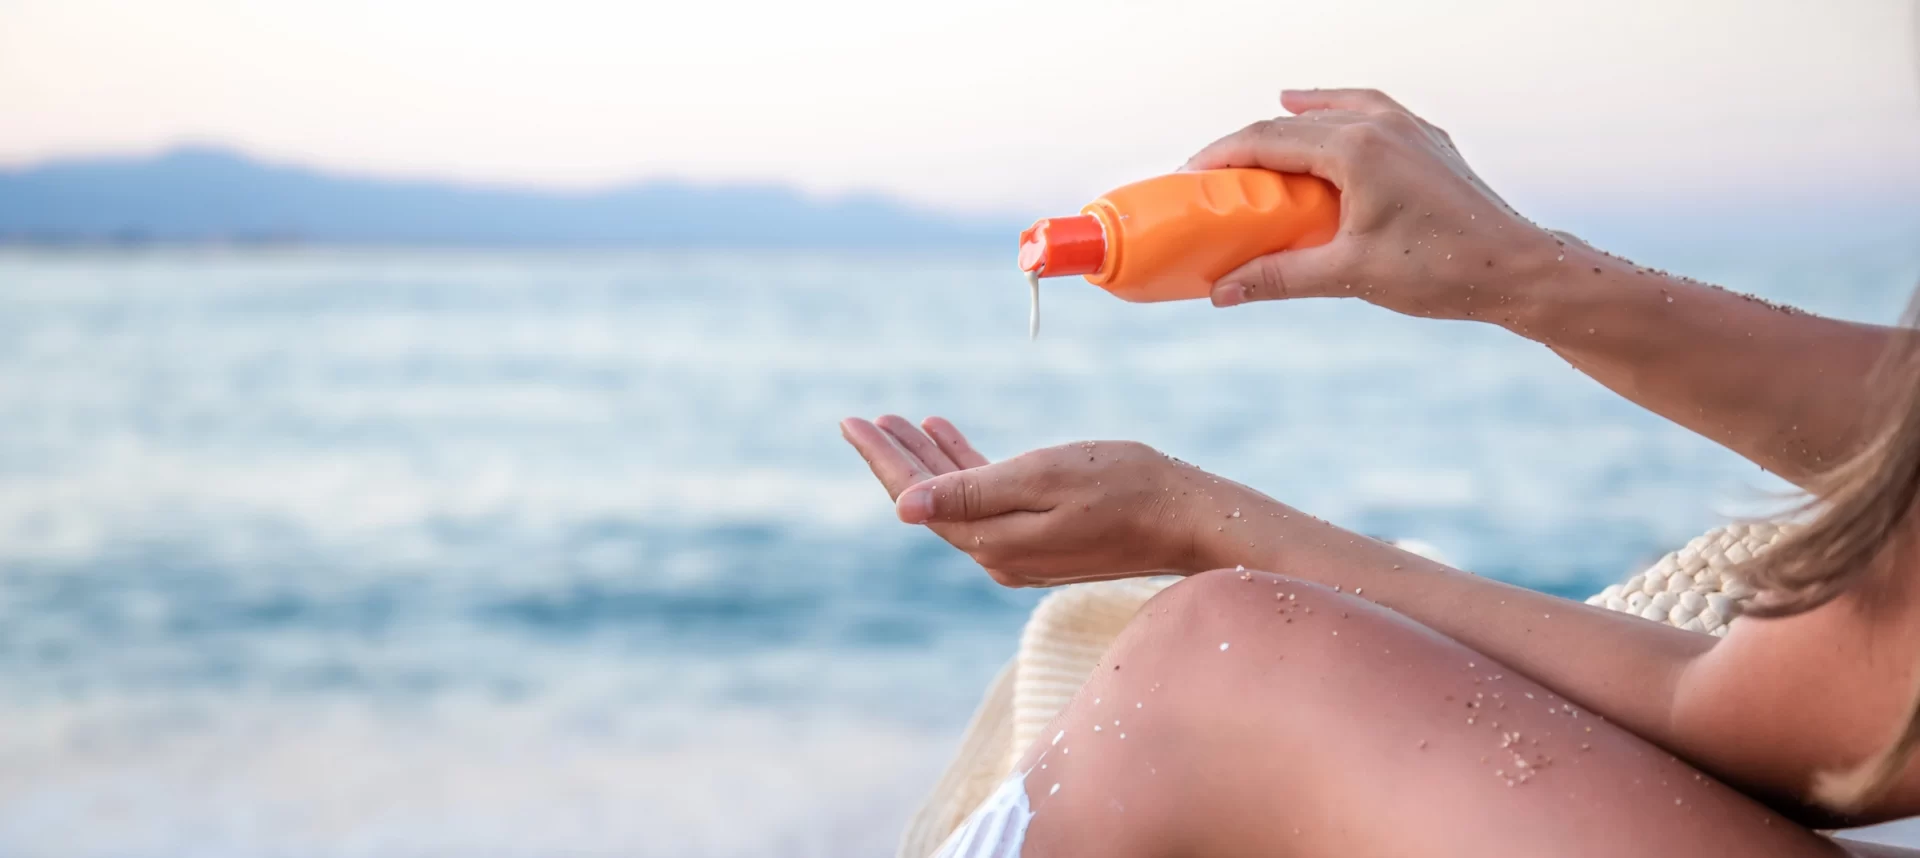 a woman applies sunscreen on the beach close up 2021 08 31 22 53 52 utc